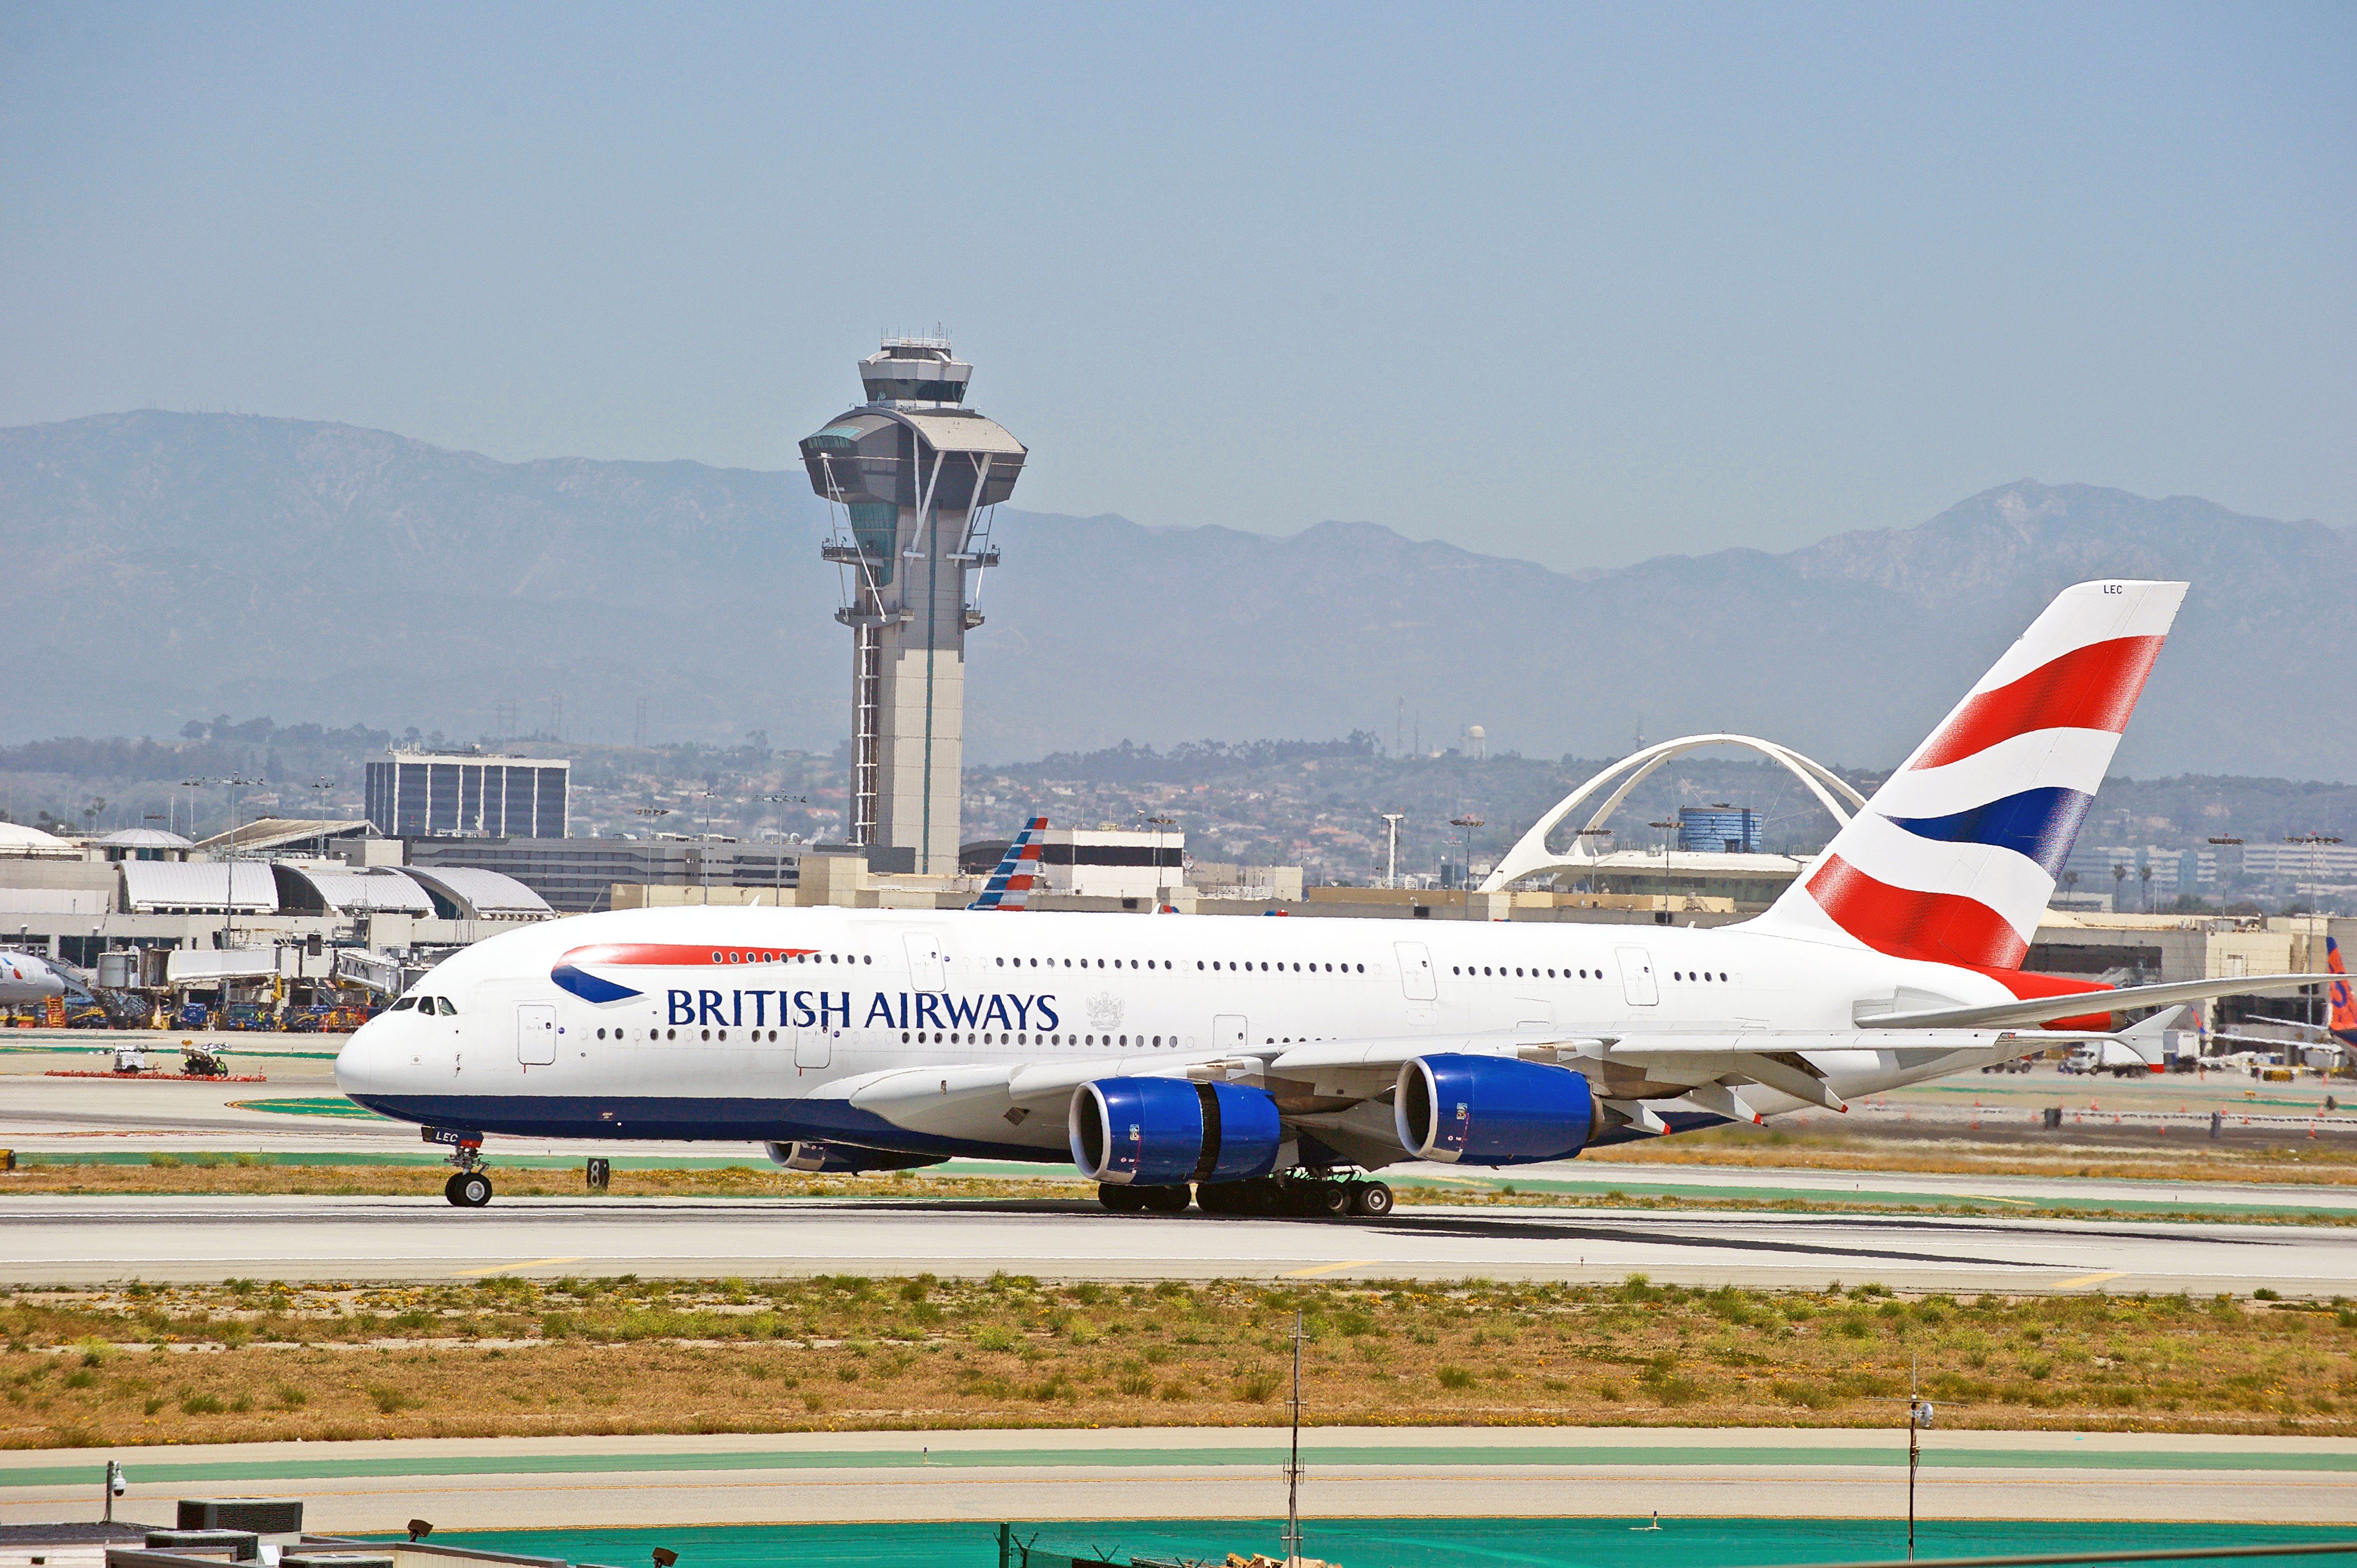 British Airways Airbus A380 aircraft taxiing along the runway upon arrival at Los Angeles International Airport.